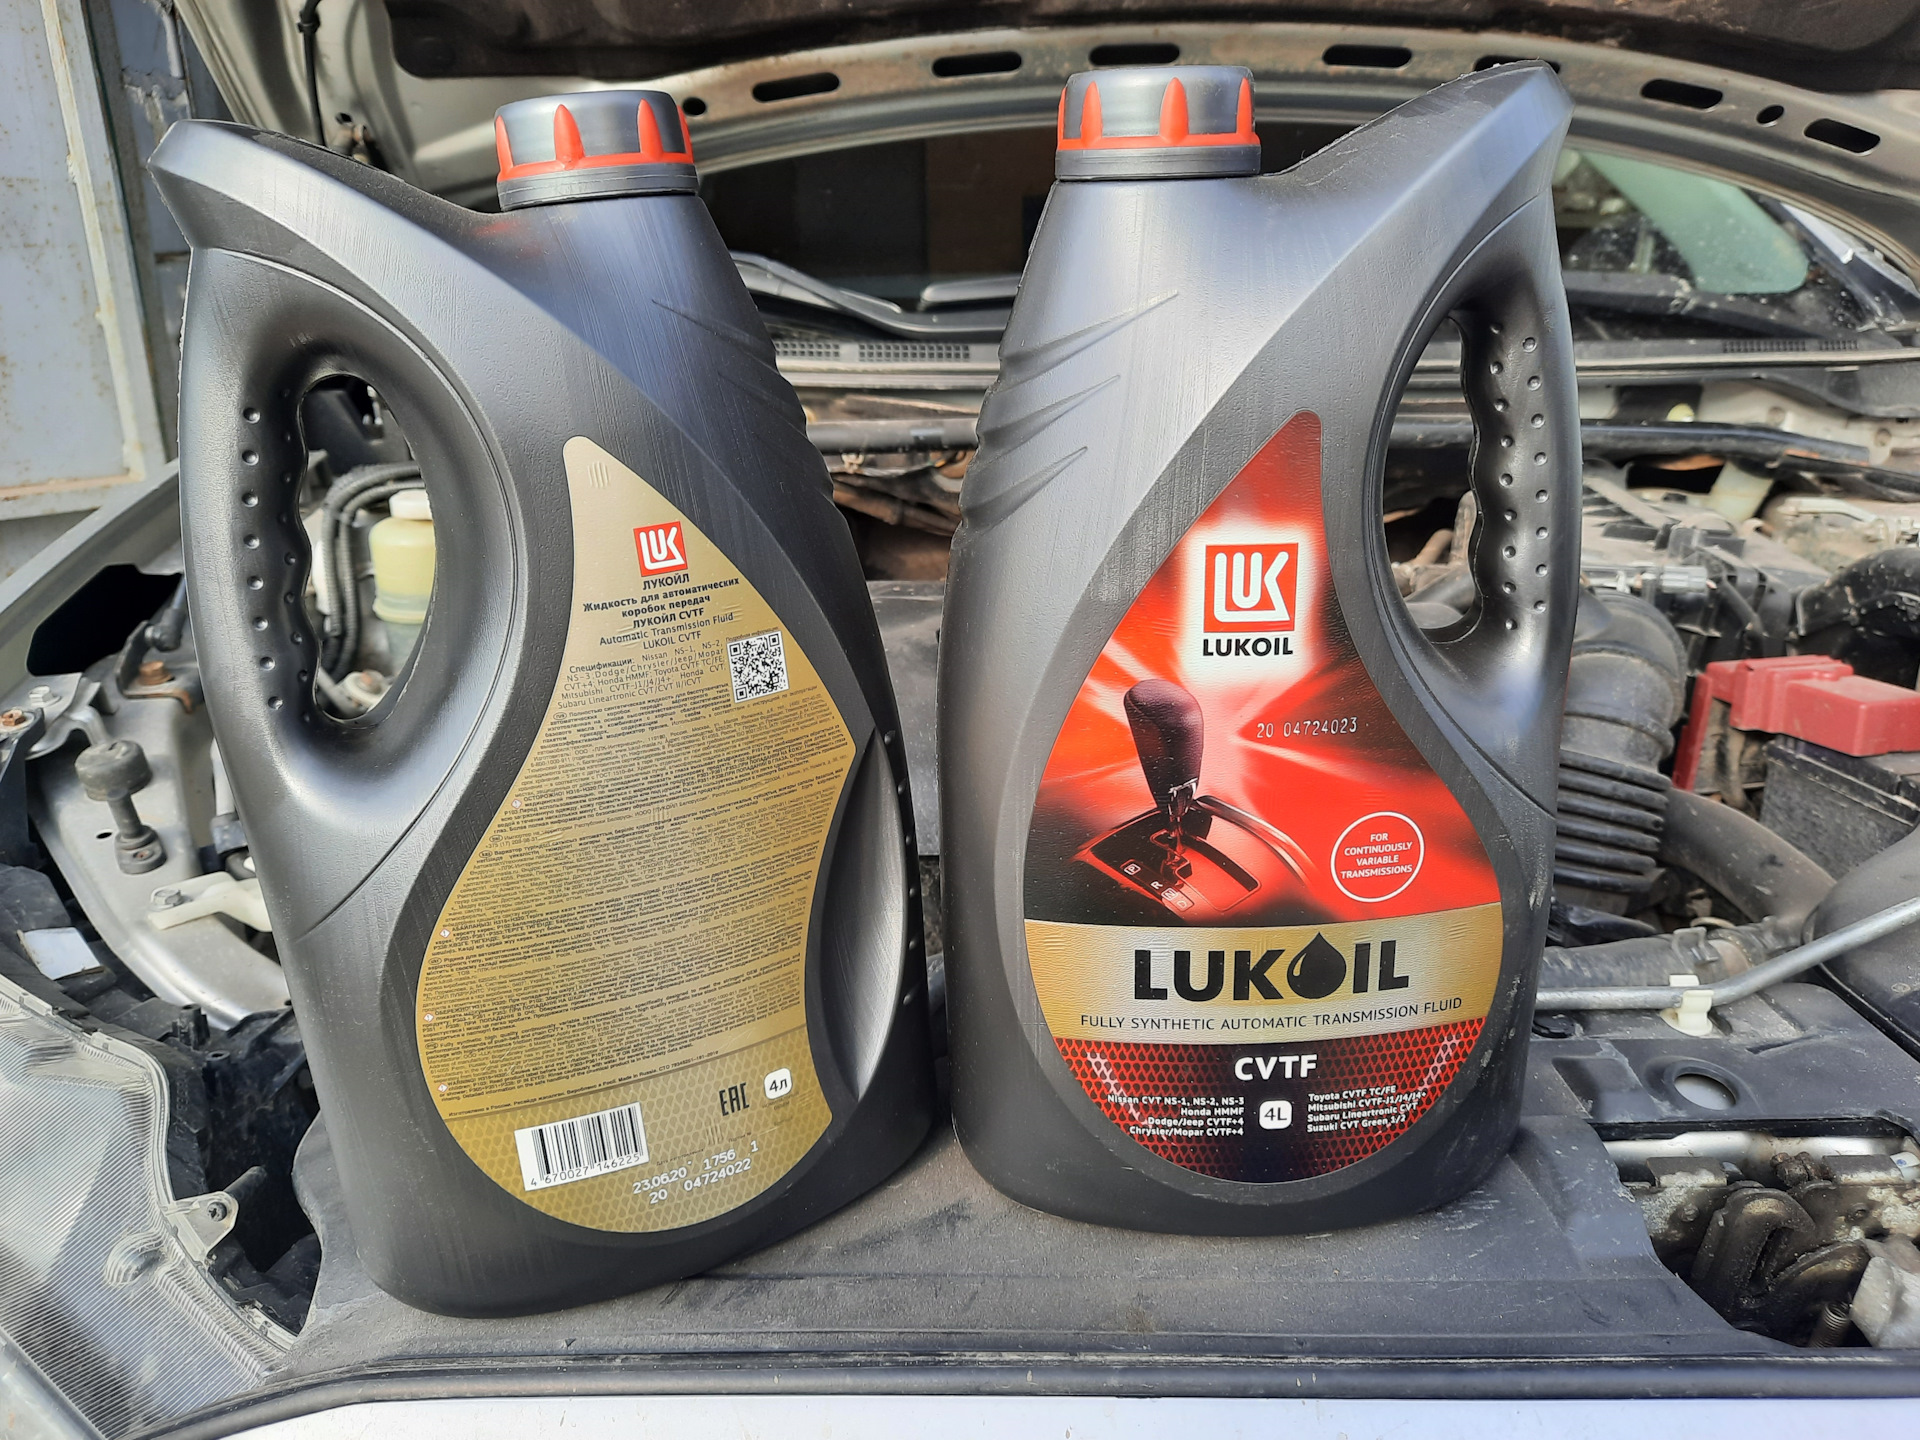 Авт лукойл. Lukoil 3146925 масло трансмиссионное. Трансмиссионное масло Лукойл НС 1. Трансмиссионное масло Лукойл CVTF 4л (3146925). Лукойл CVTF (4л).